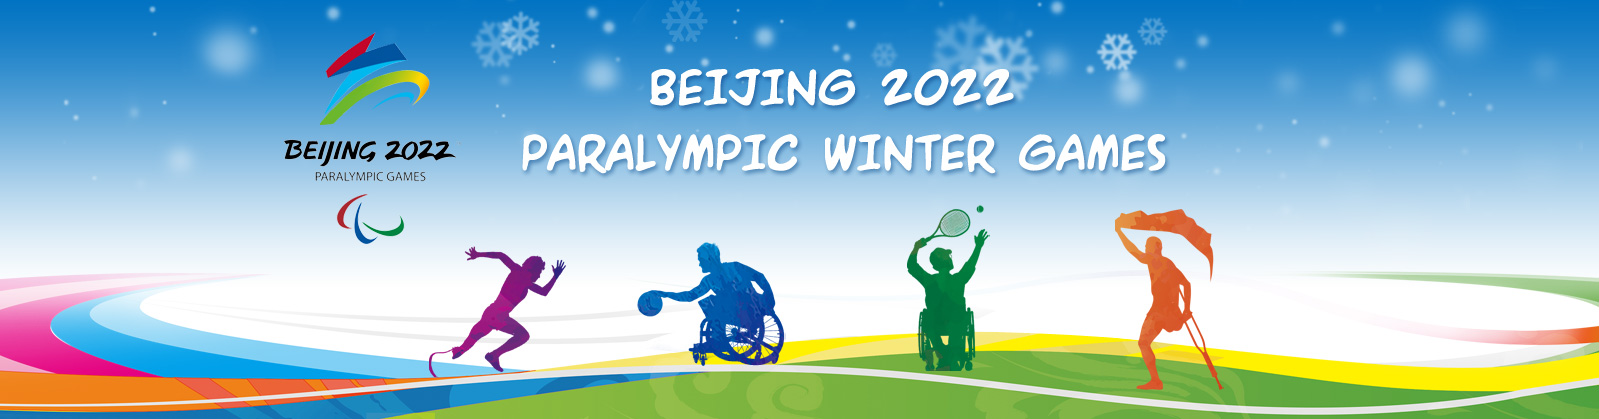 Beijing 2022 Paralympic Winter Games